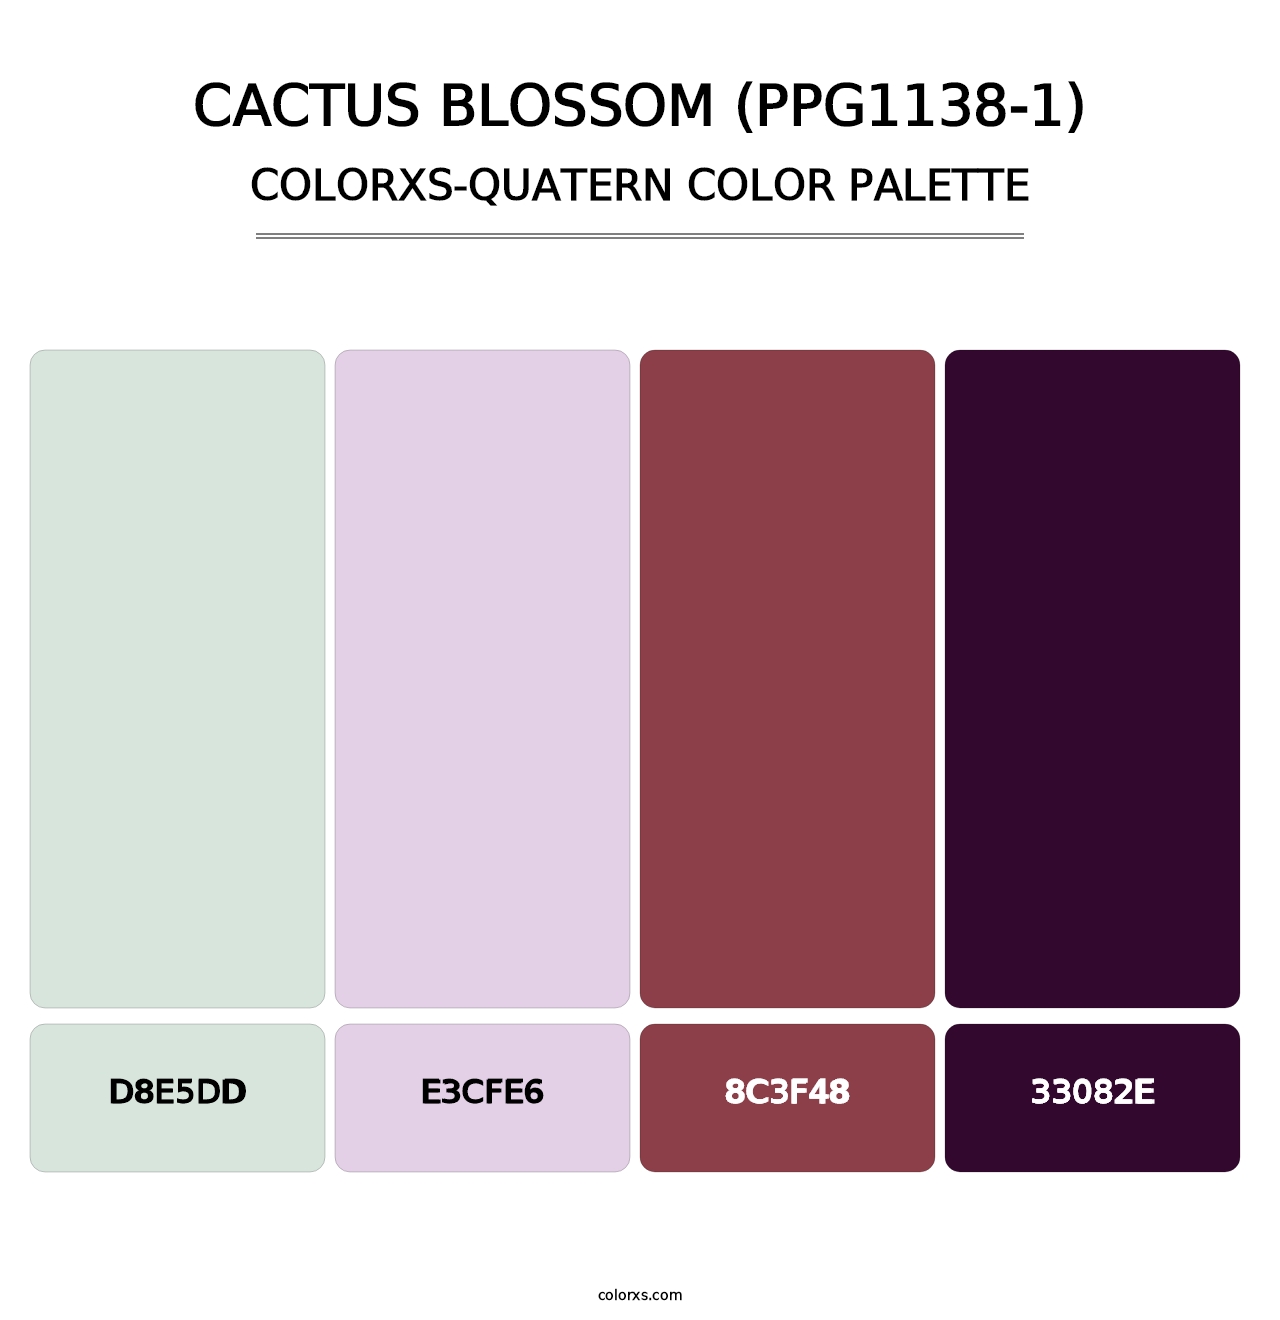 Cactus Blossom (PPG1138-1) - Colorxs Quatern Palette